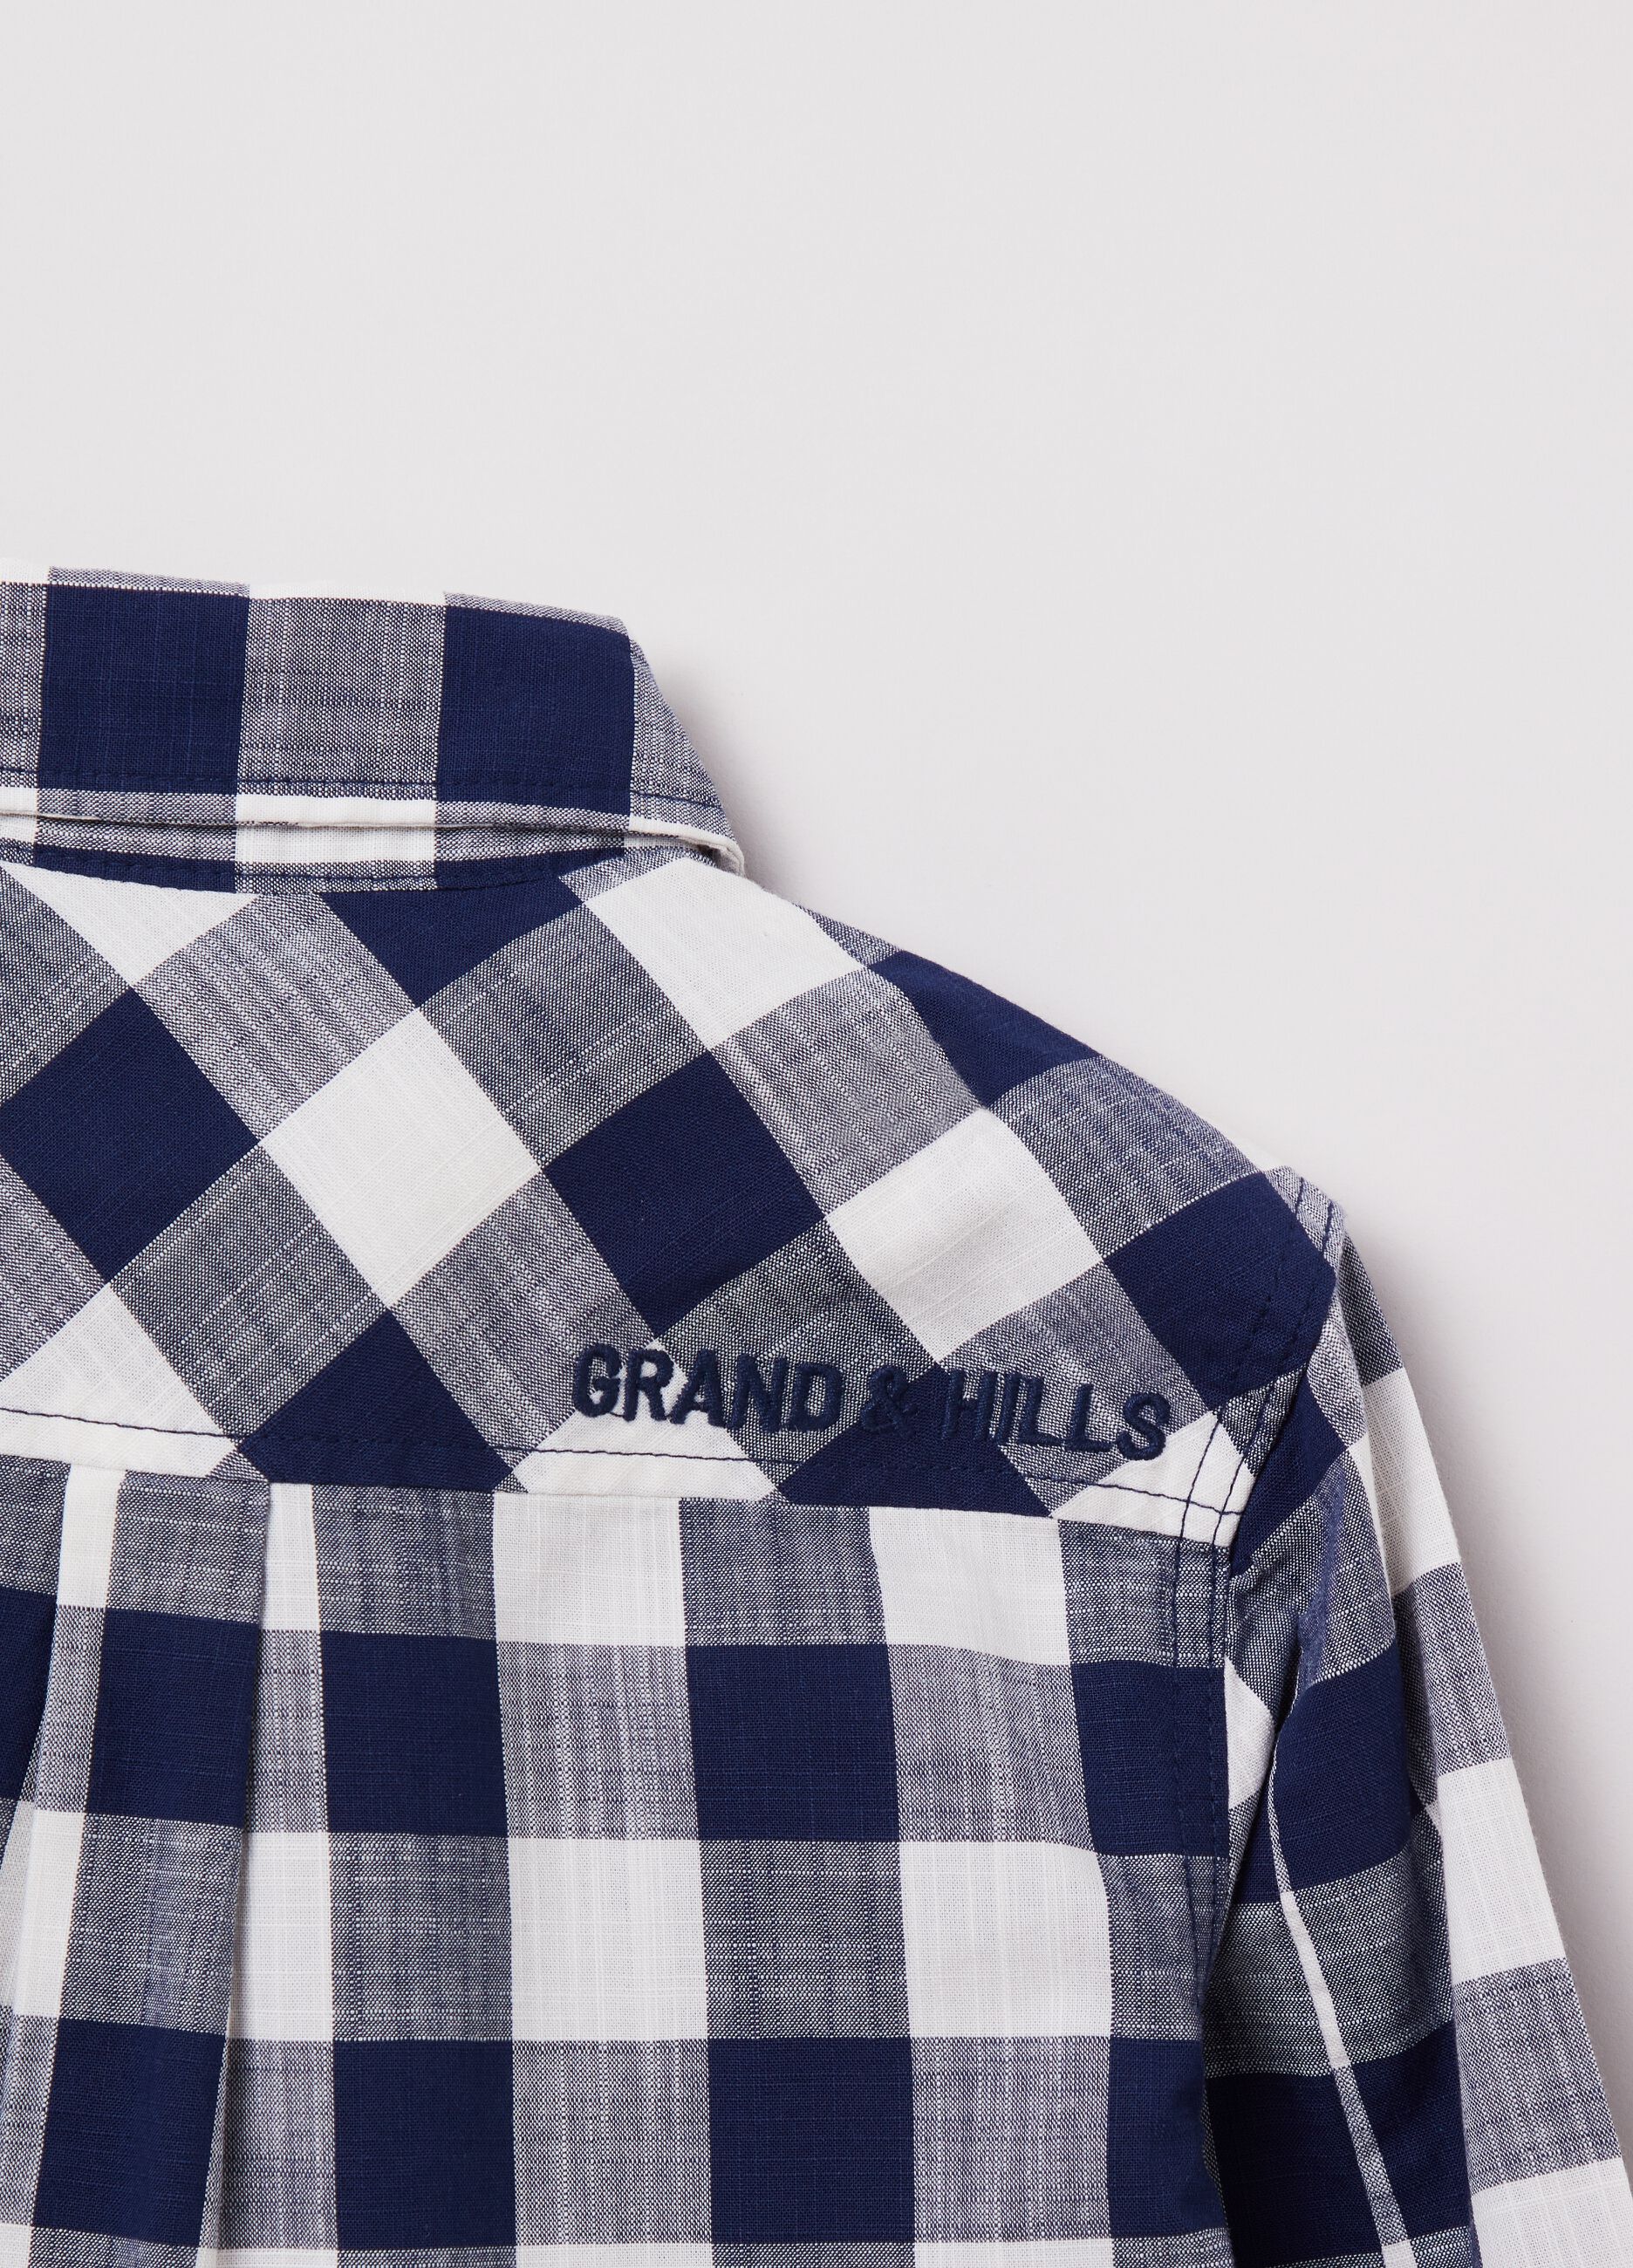 Grand&Hills check shirt